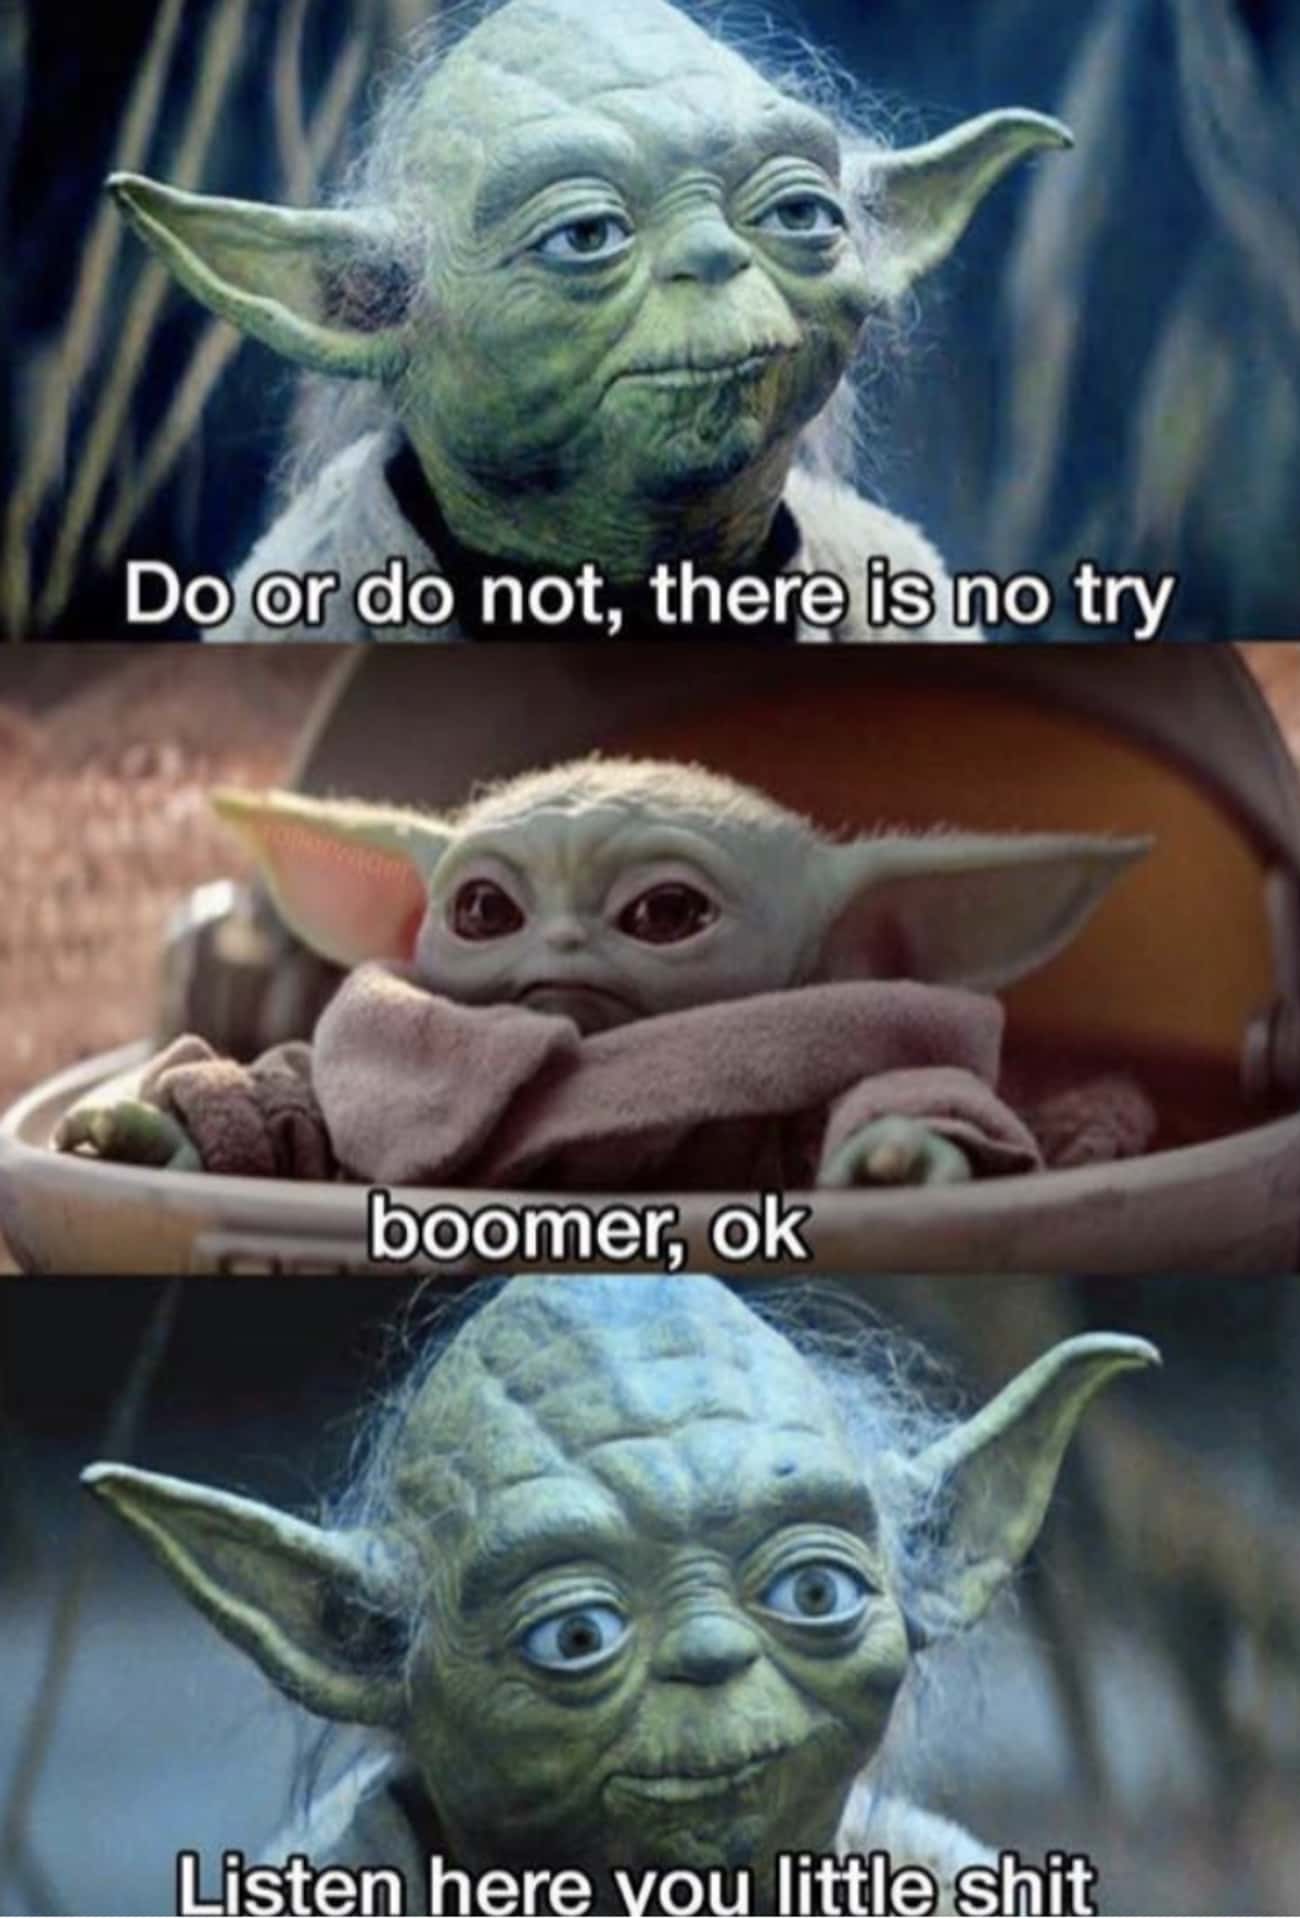 Boomer, OK!